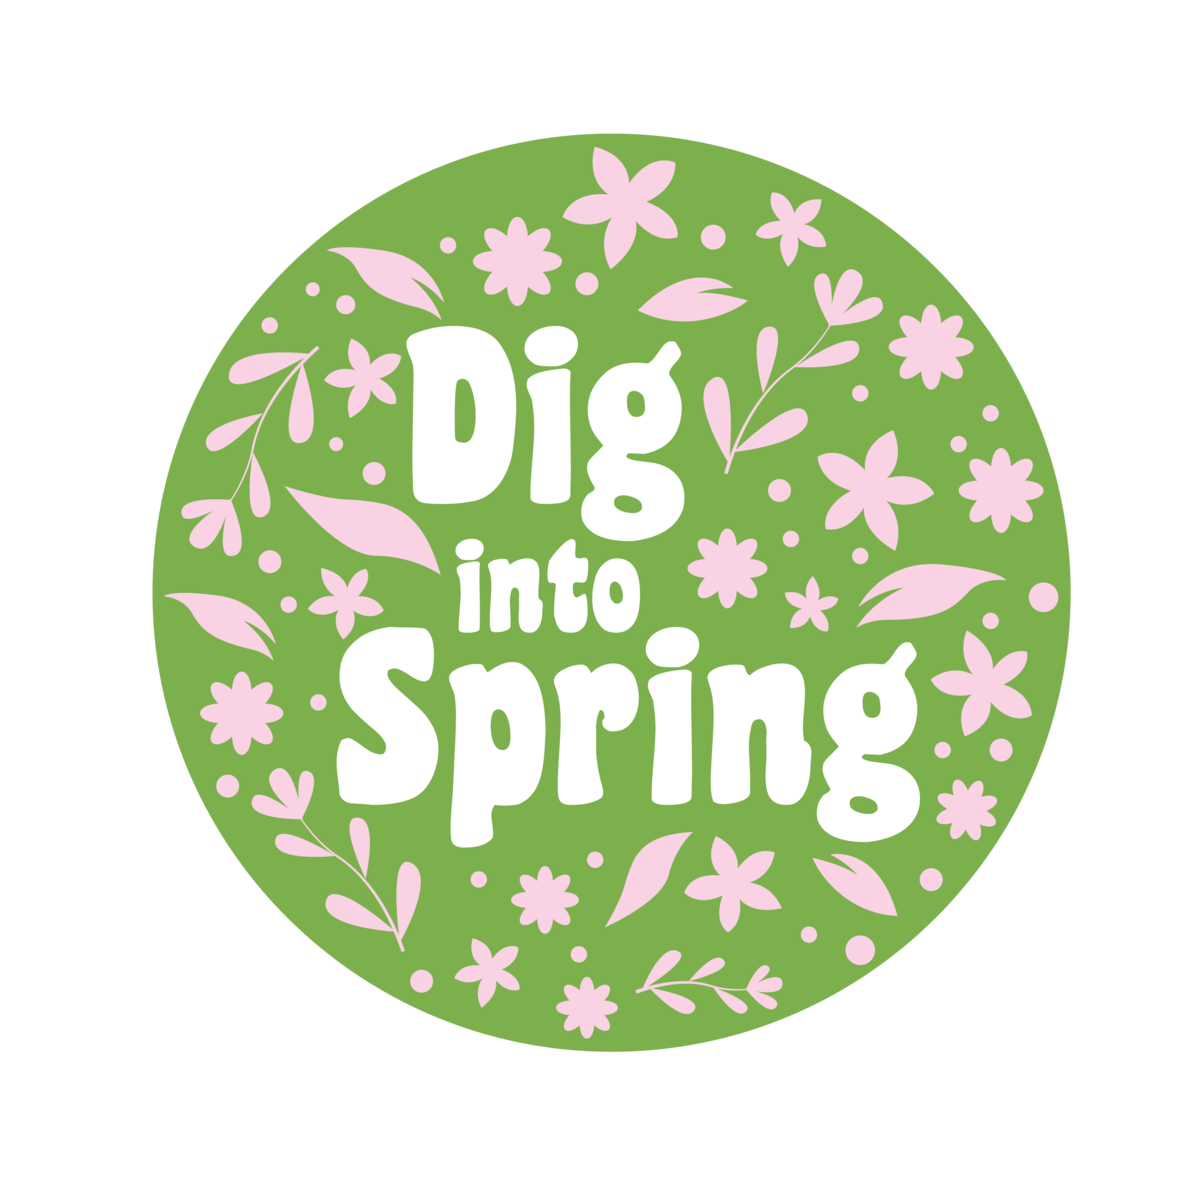 Dig Into Spring